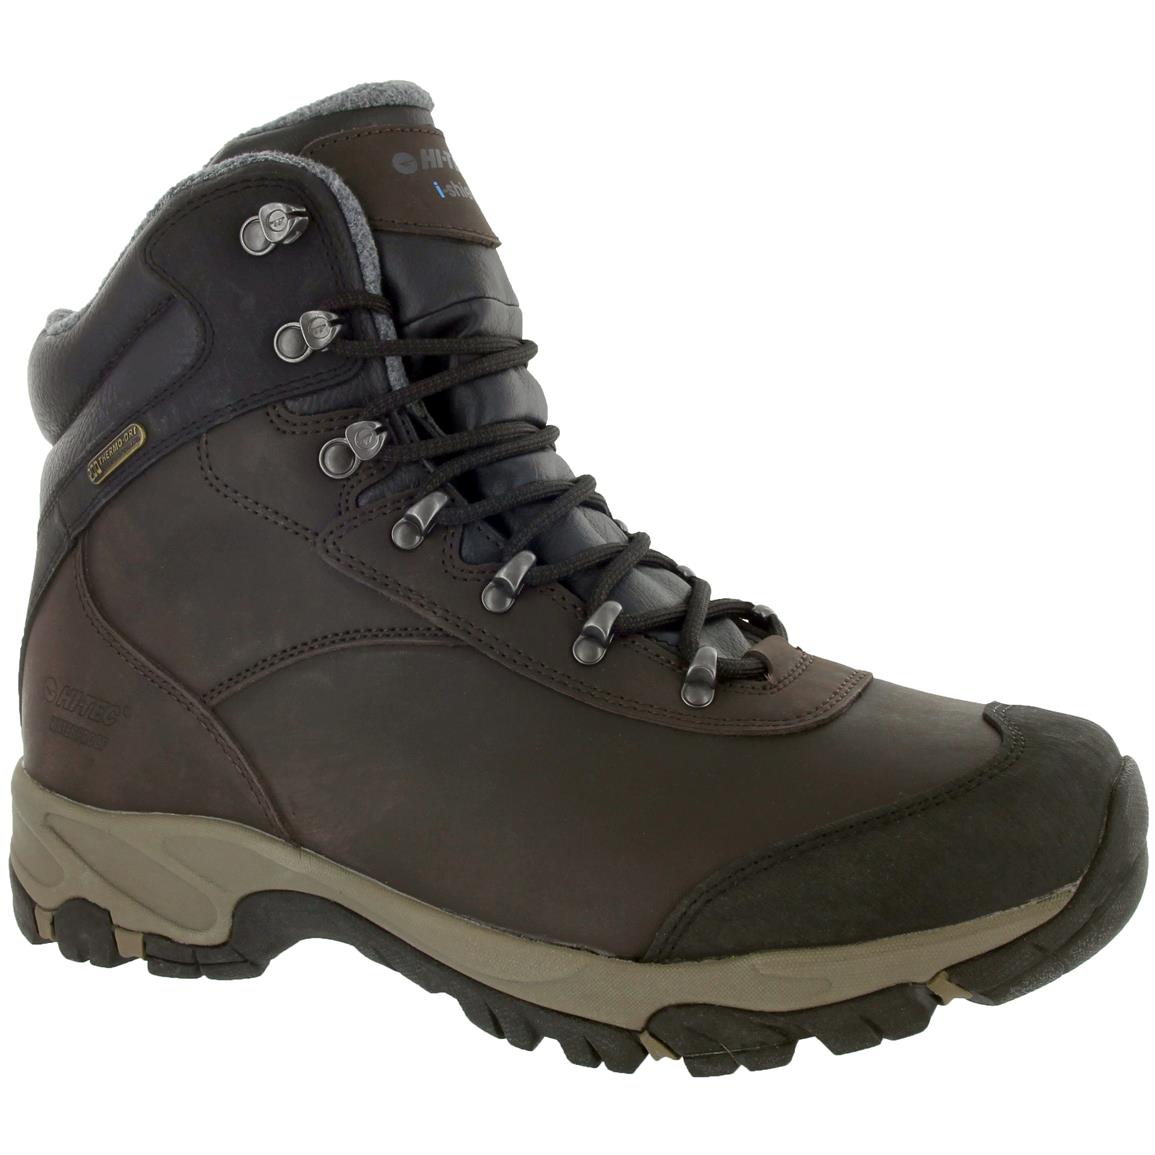 Hi-Tec Altitude V 200 i Insulated Men's Hiking Boots, Waterproof